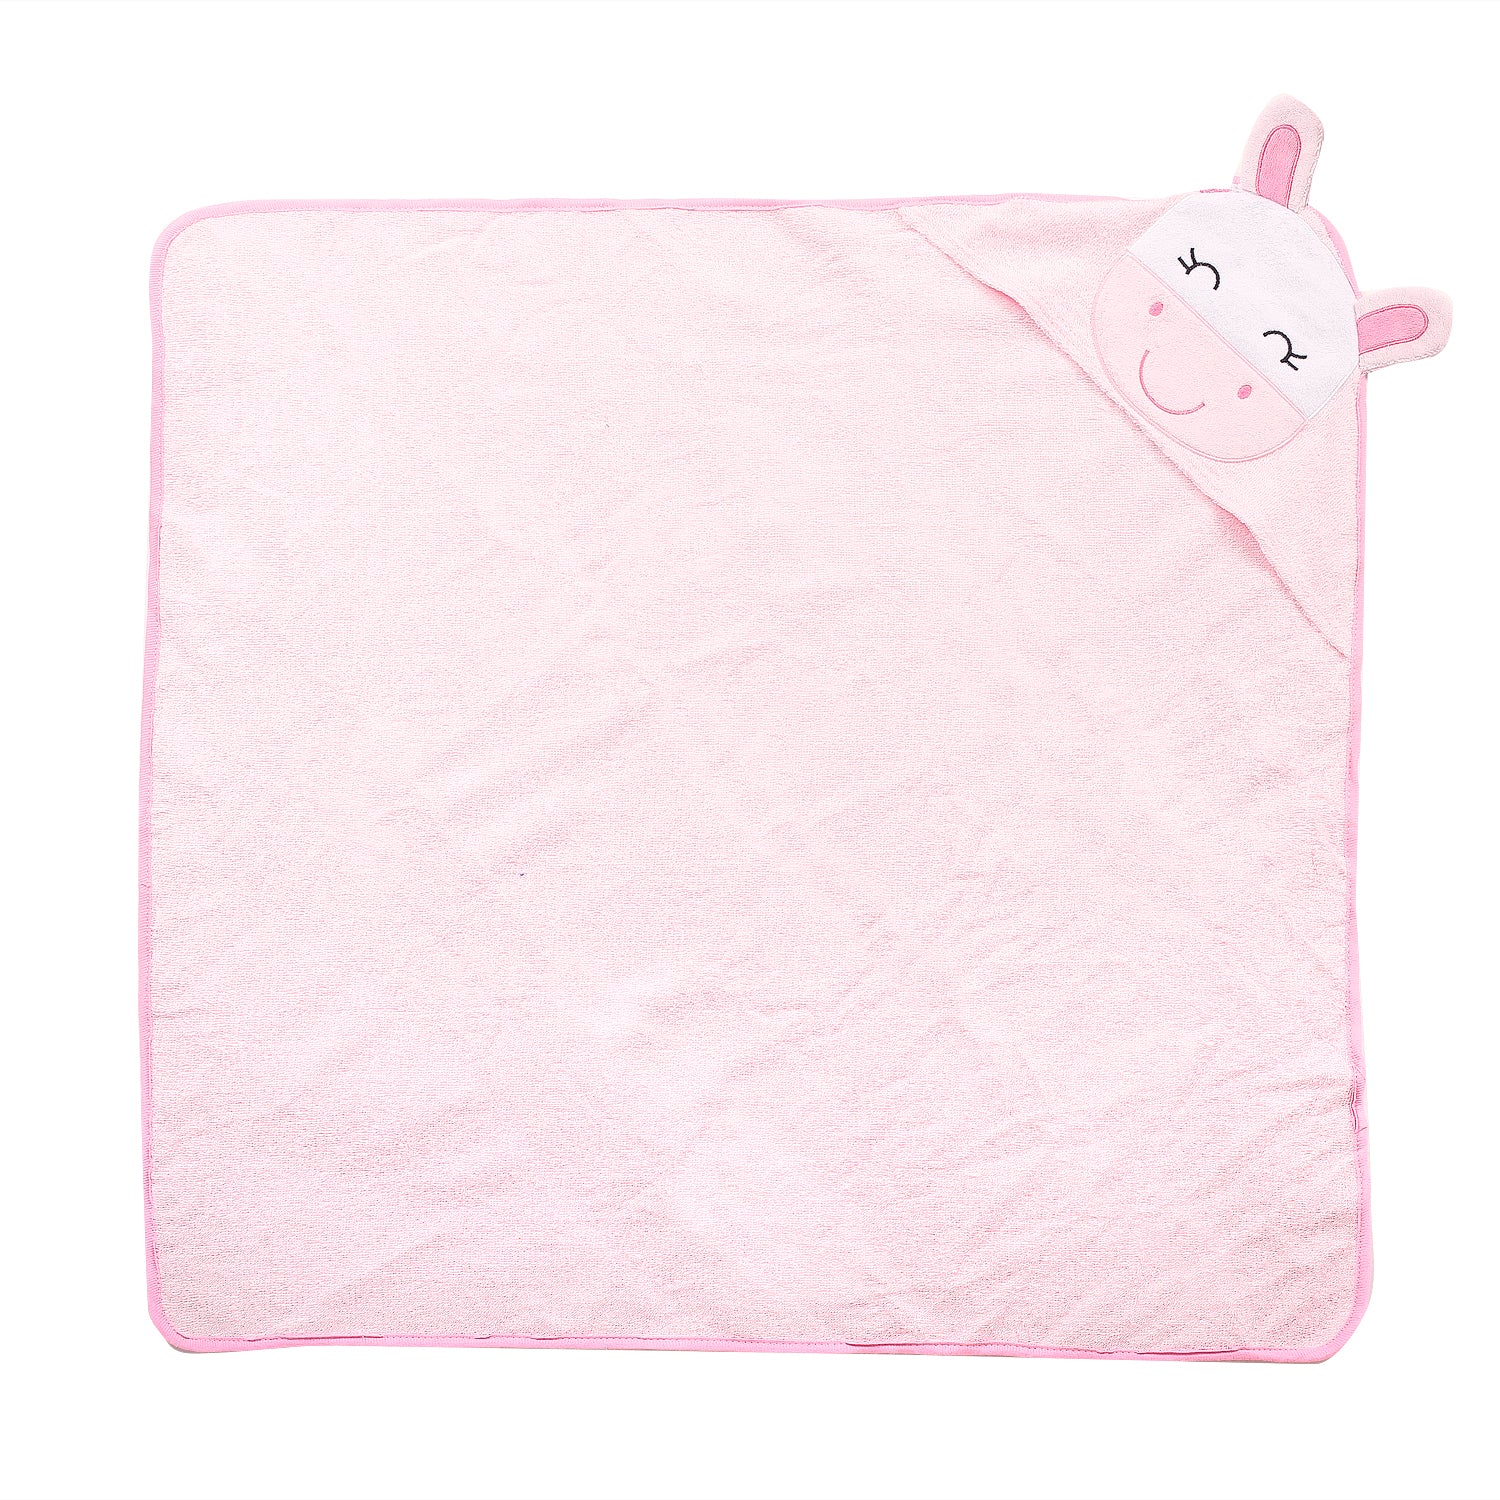 Sleepy Bunny Pink Hooded Towel